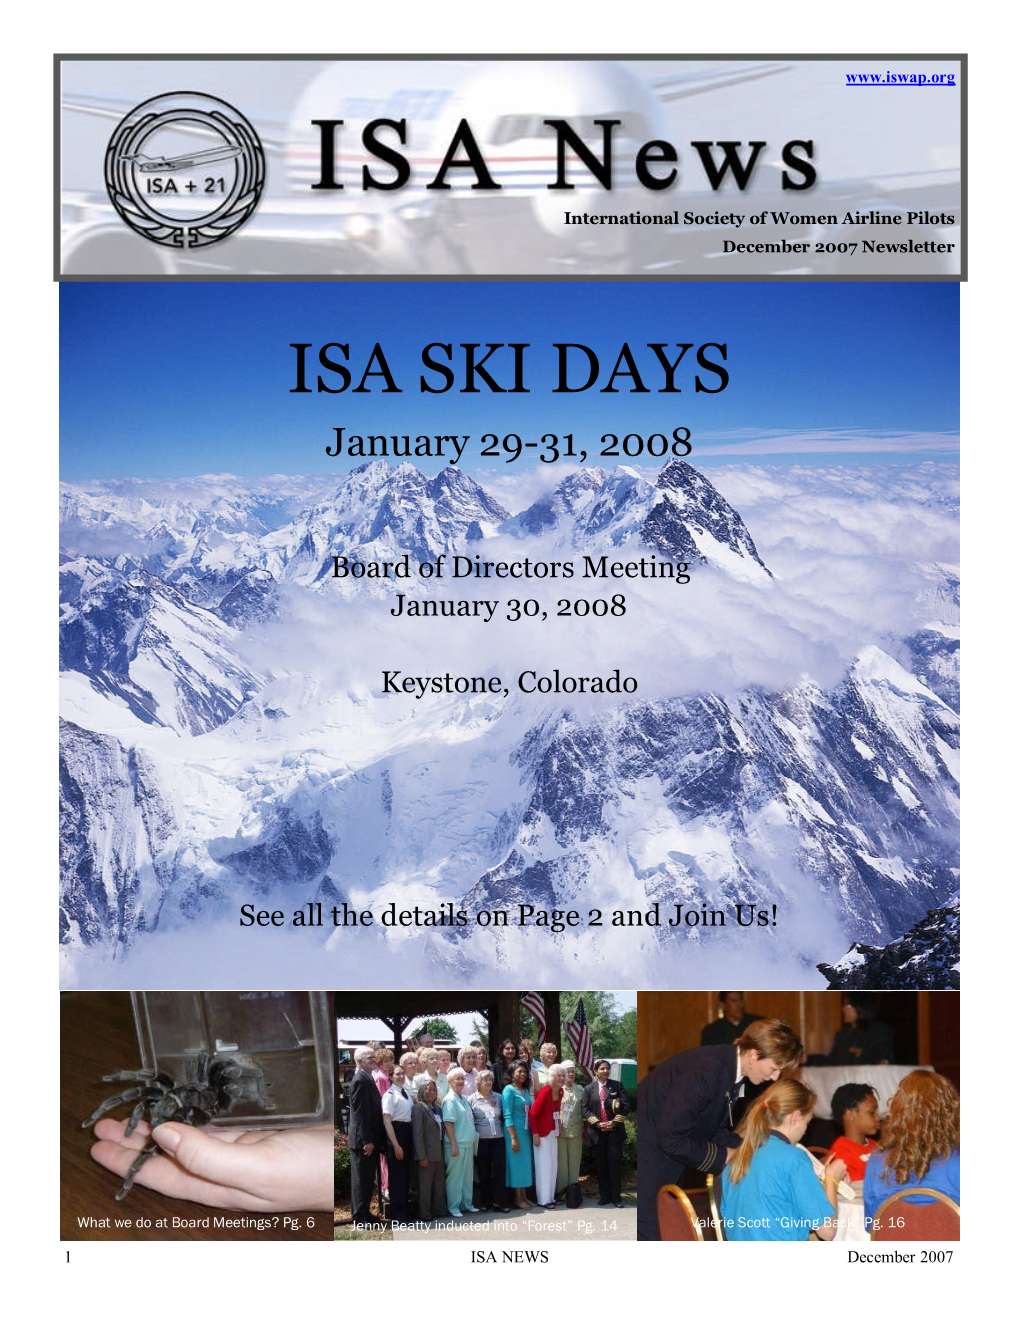 ISA SKI DAYS January 29-31, 2008